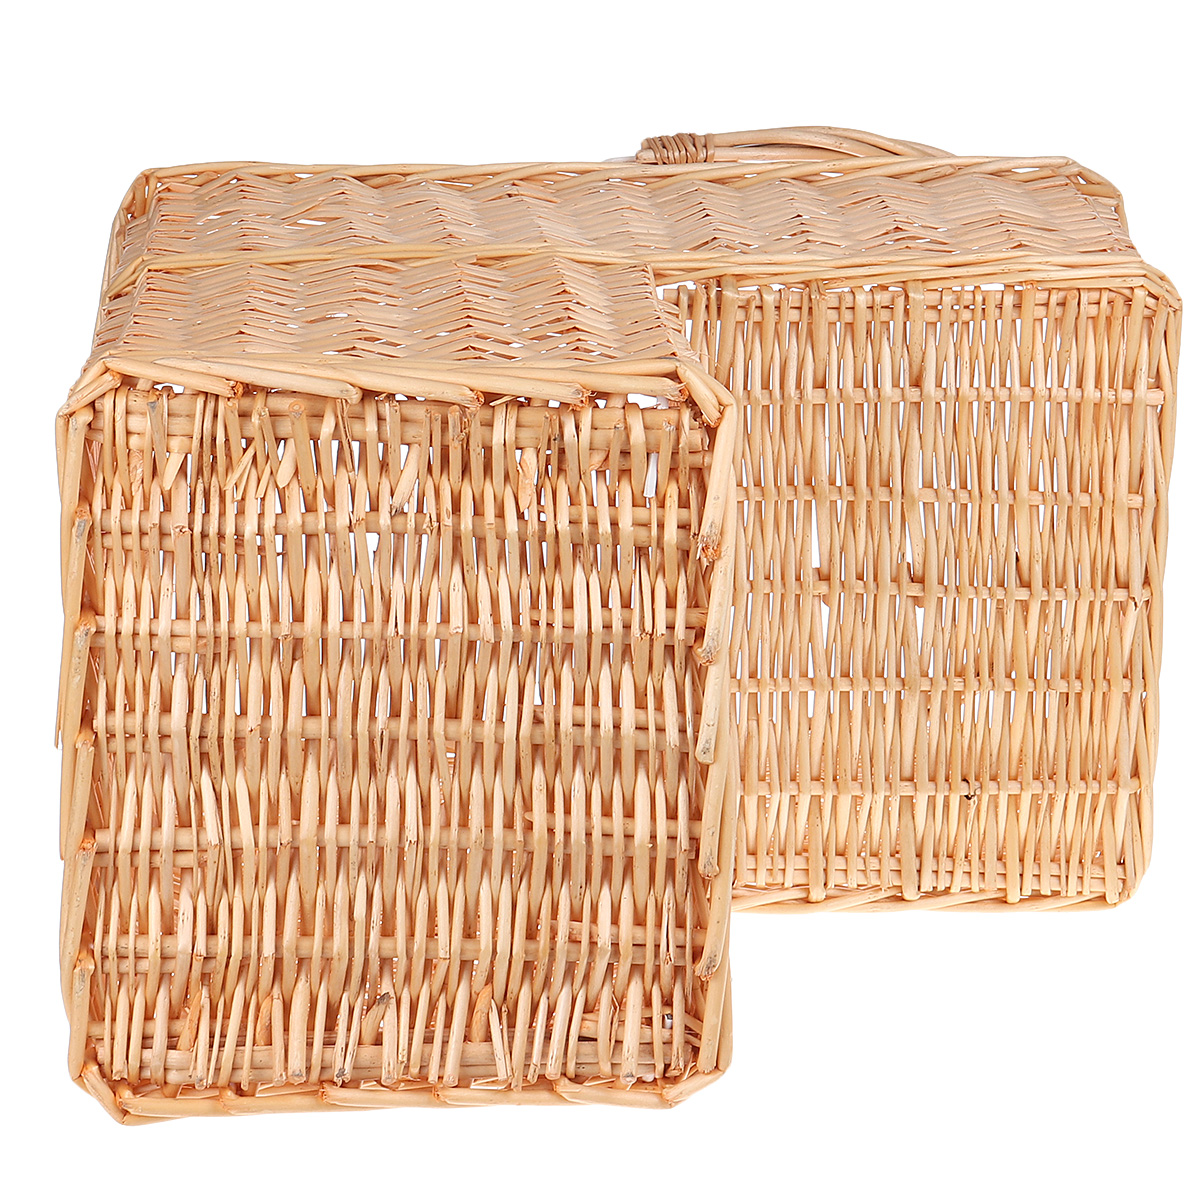 Willow-Woven-Basket-Box-Seagrass-Storage-Hamper-Laundry-Holder-Home-Organizer-1688975-6